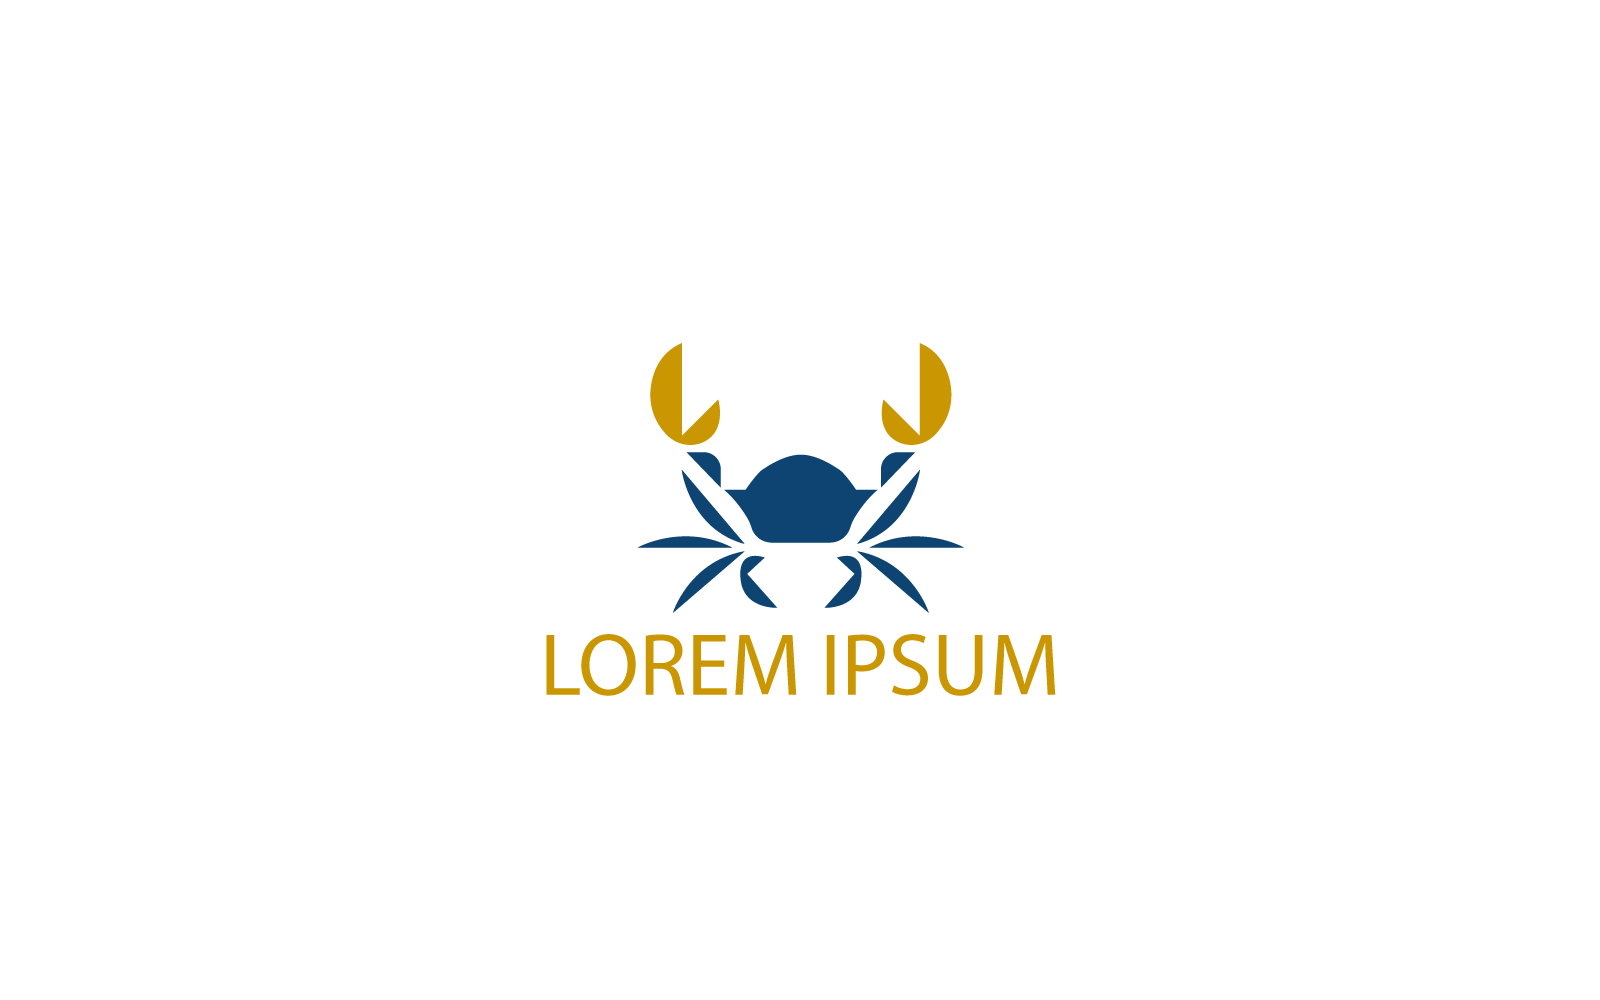 Création de logo de crabe minimaliste moderne